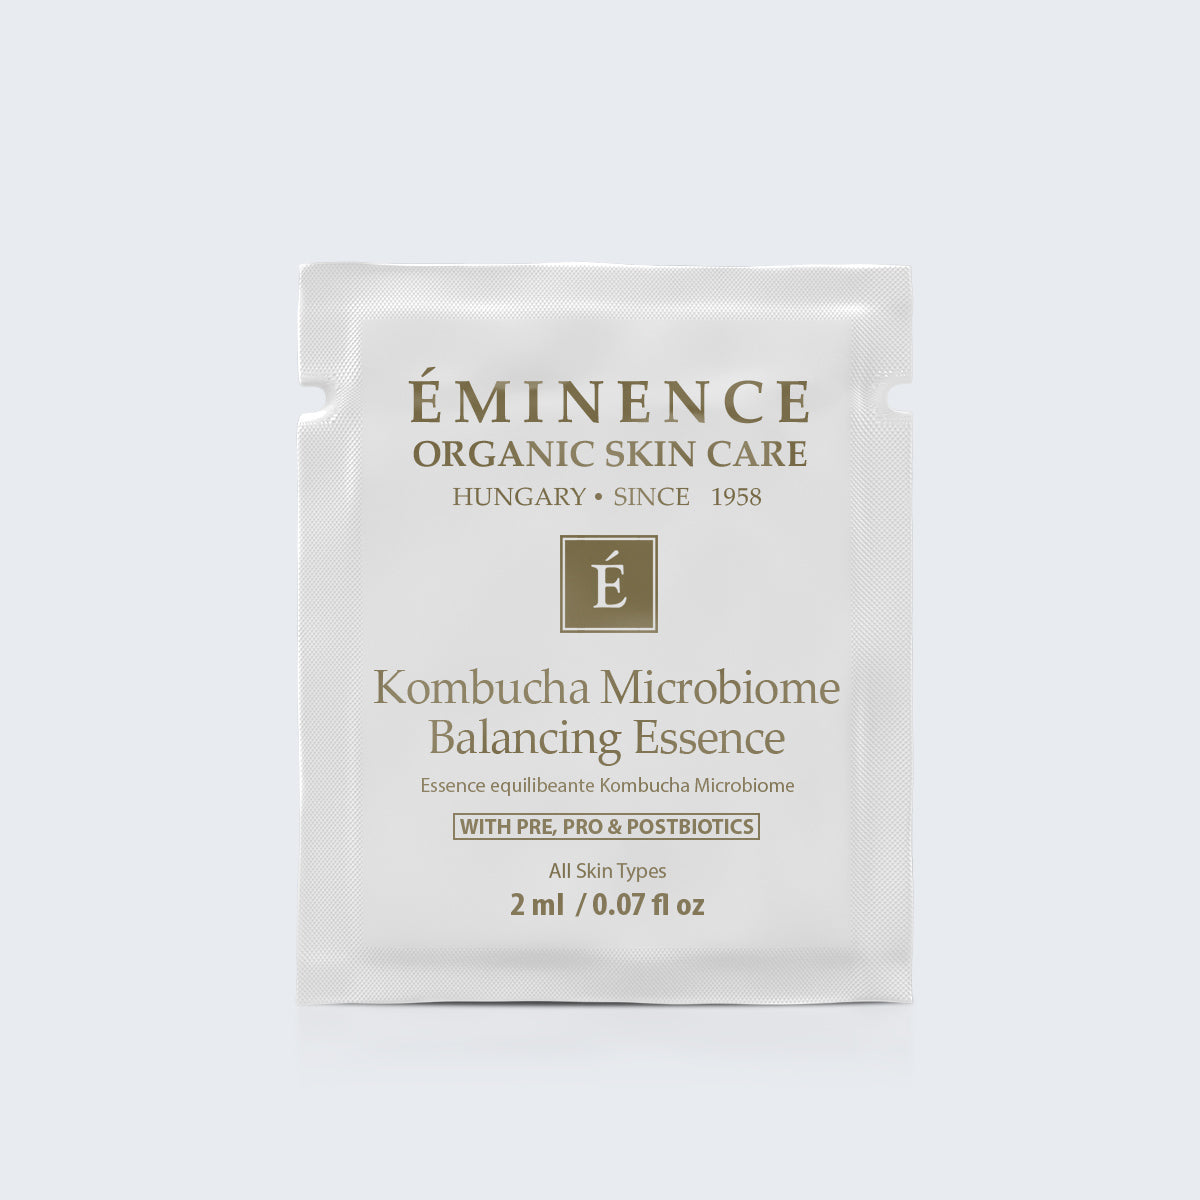 Eminence Organics Kombucha Microbiome Balancing Essence Sample Card